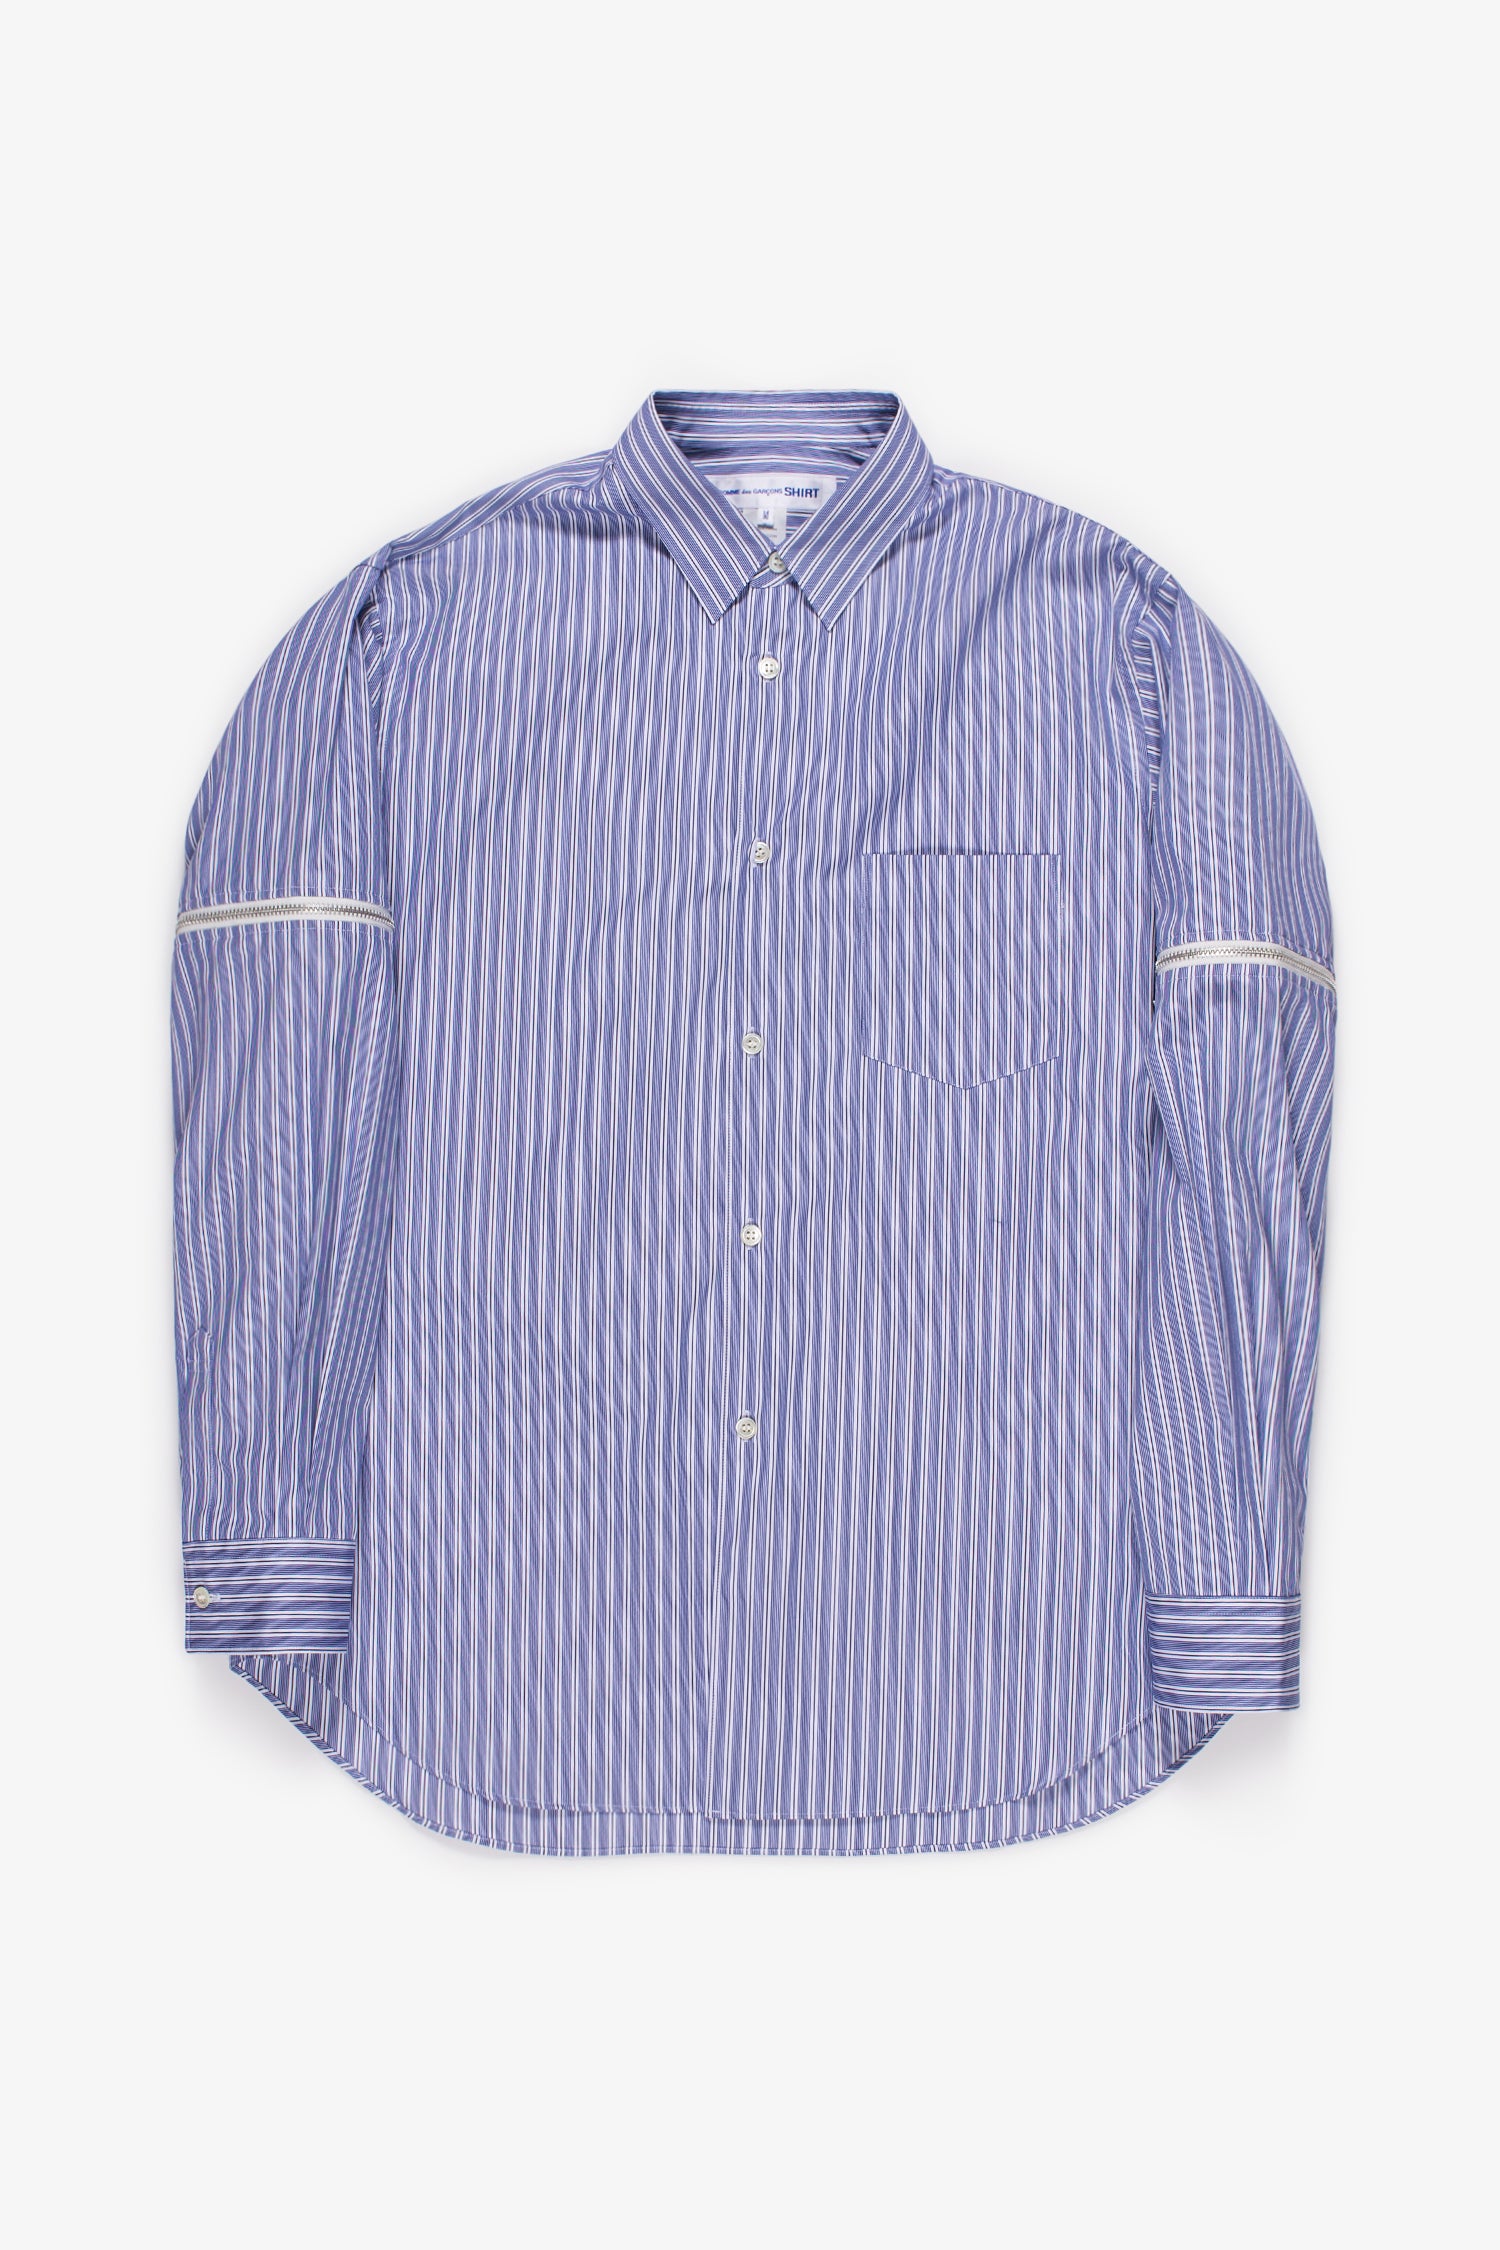 Selectshop FRAME - COMME DES GARÇONS SHIRT Zip Detail Striped Shirt Shirt Dubai